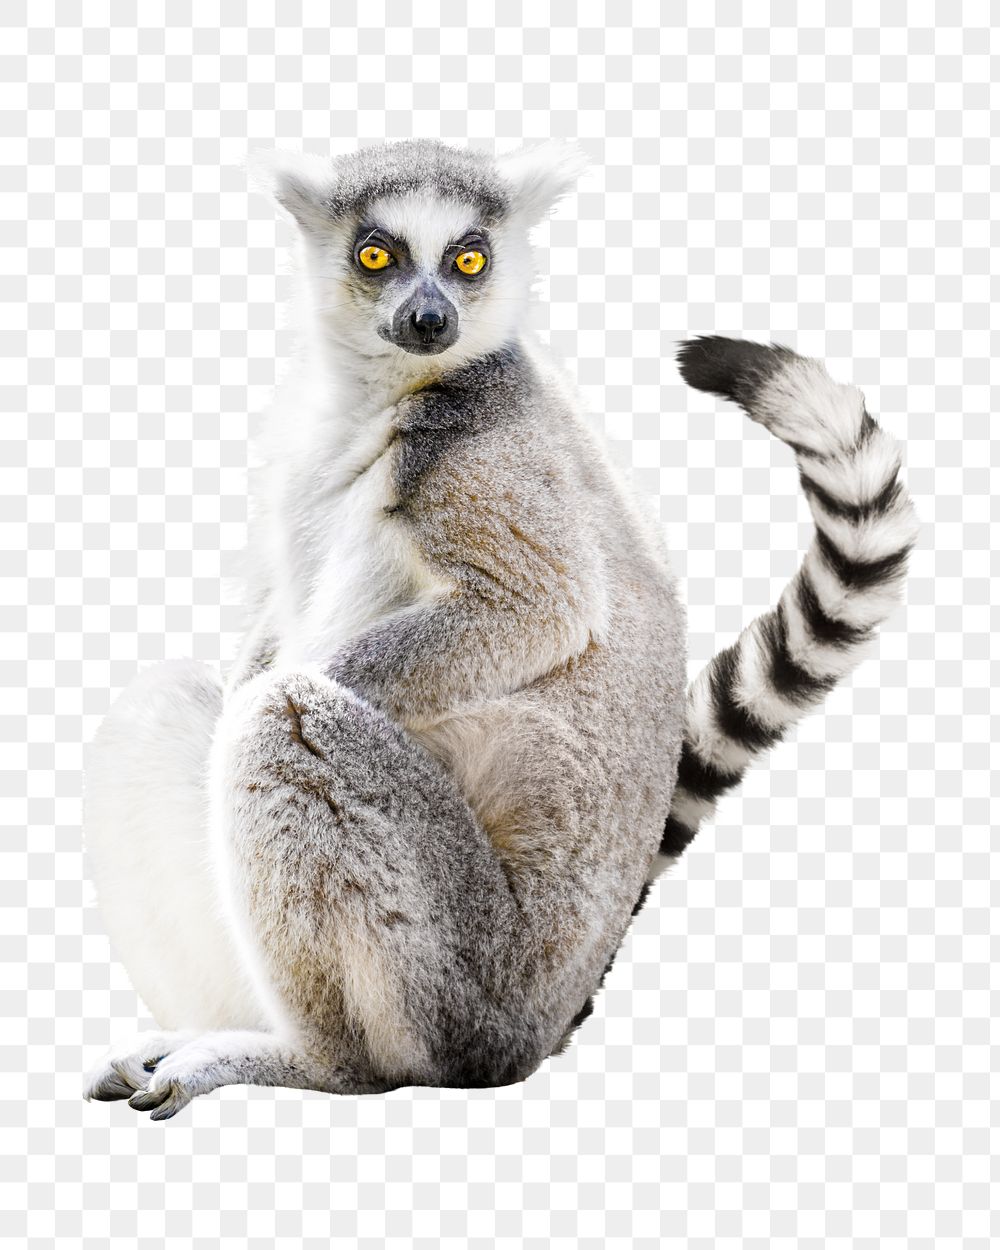 Lemur sitting png, design element, transparent background